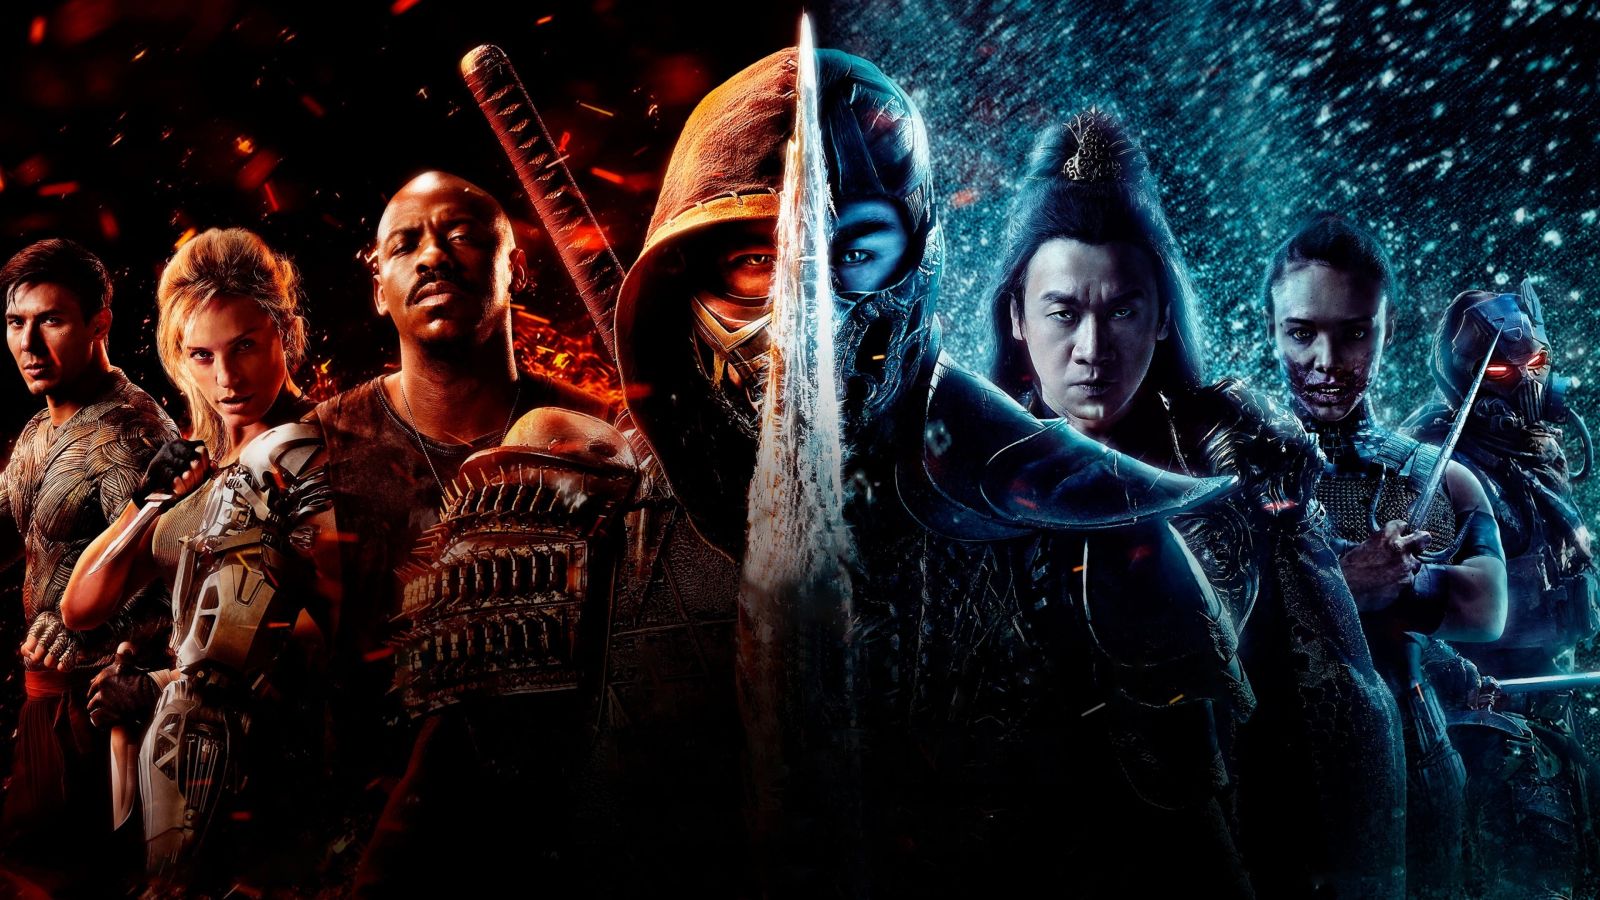 Watch Mortal Kombat (2021) Full Movies Full HD | Watch Free Online